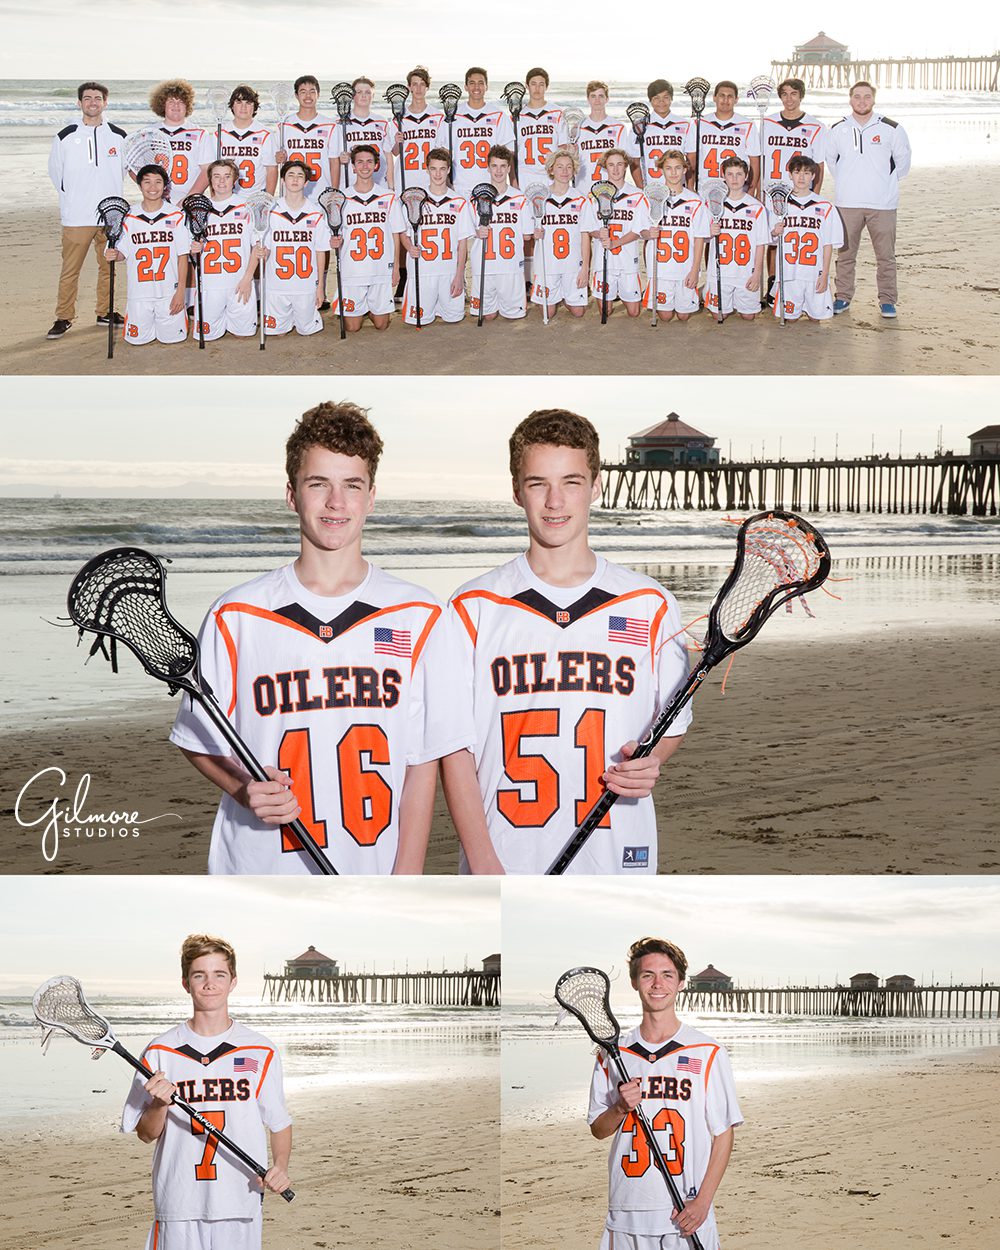 High School Lacrosse Photographer, Orange County, Huntington Beach Oilers, Team Photos, sports photography, group photo, coach, coaching staff, white and orange jersey, lacrosse stick